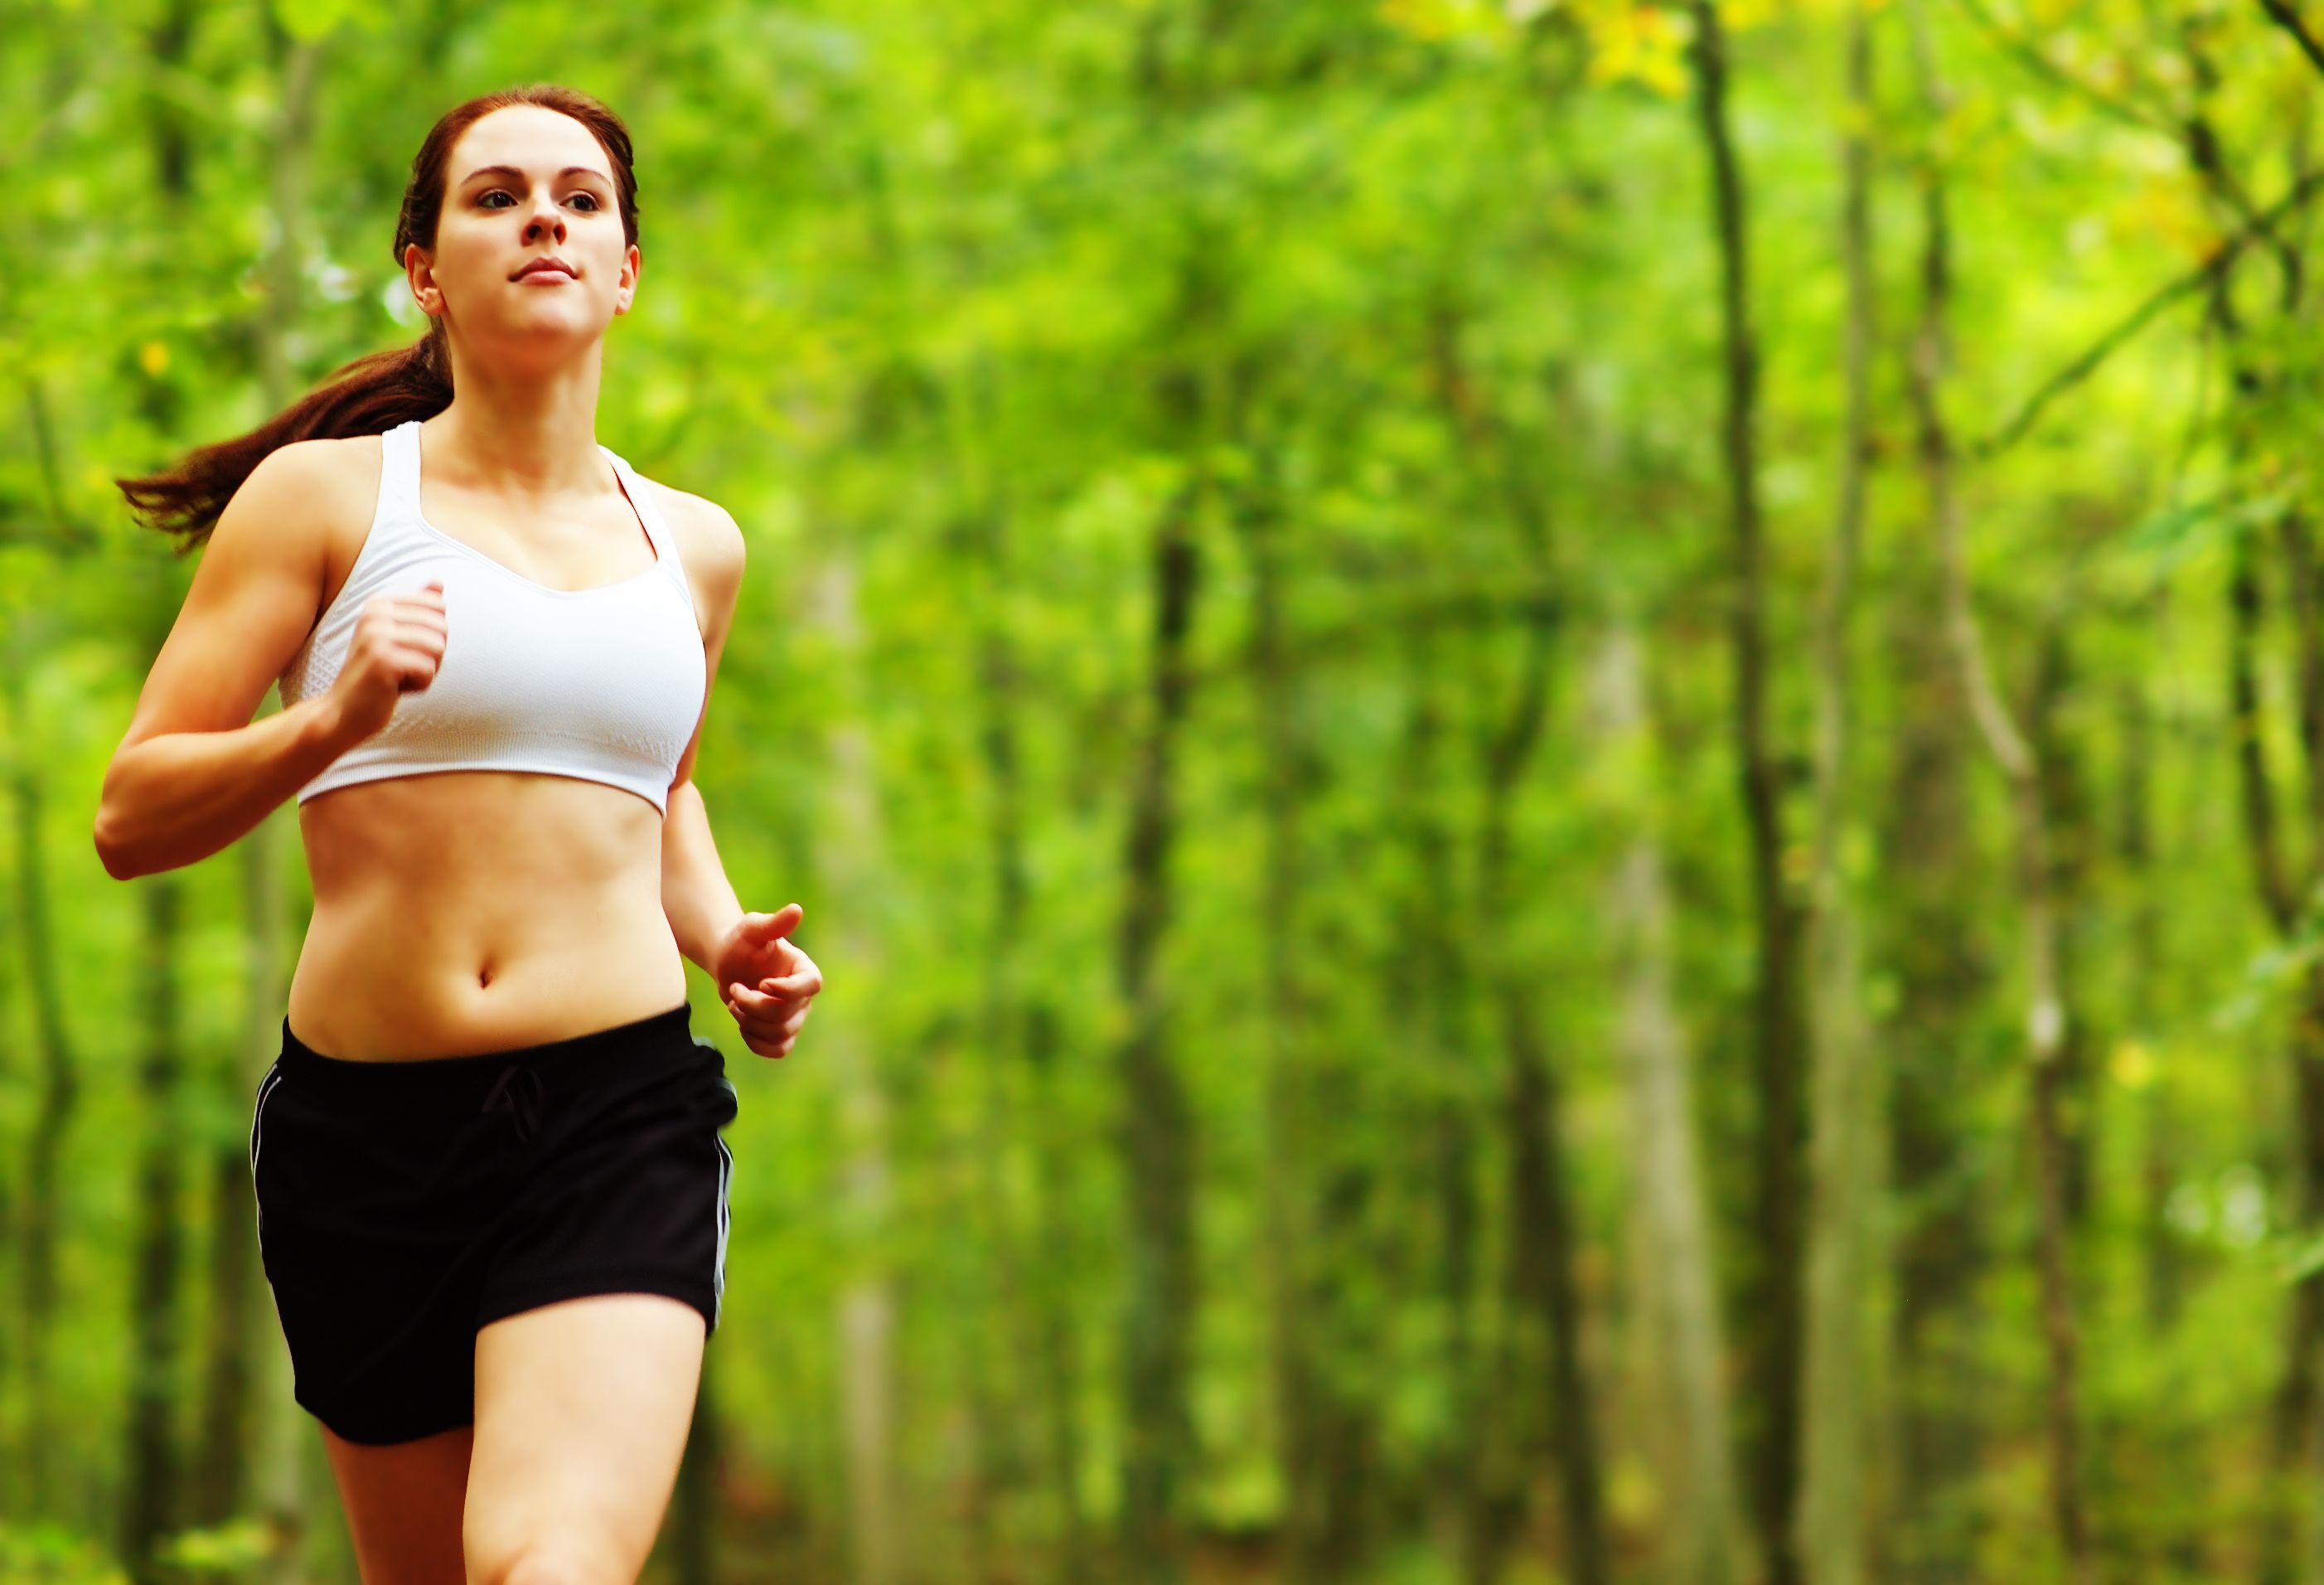 Пробежка для здоровья. Утренняя пробежка. Девушка бежит. Женщина на пробежке. Занятие спортом на природе.